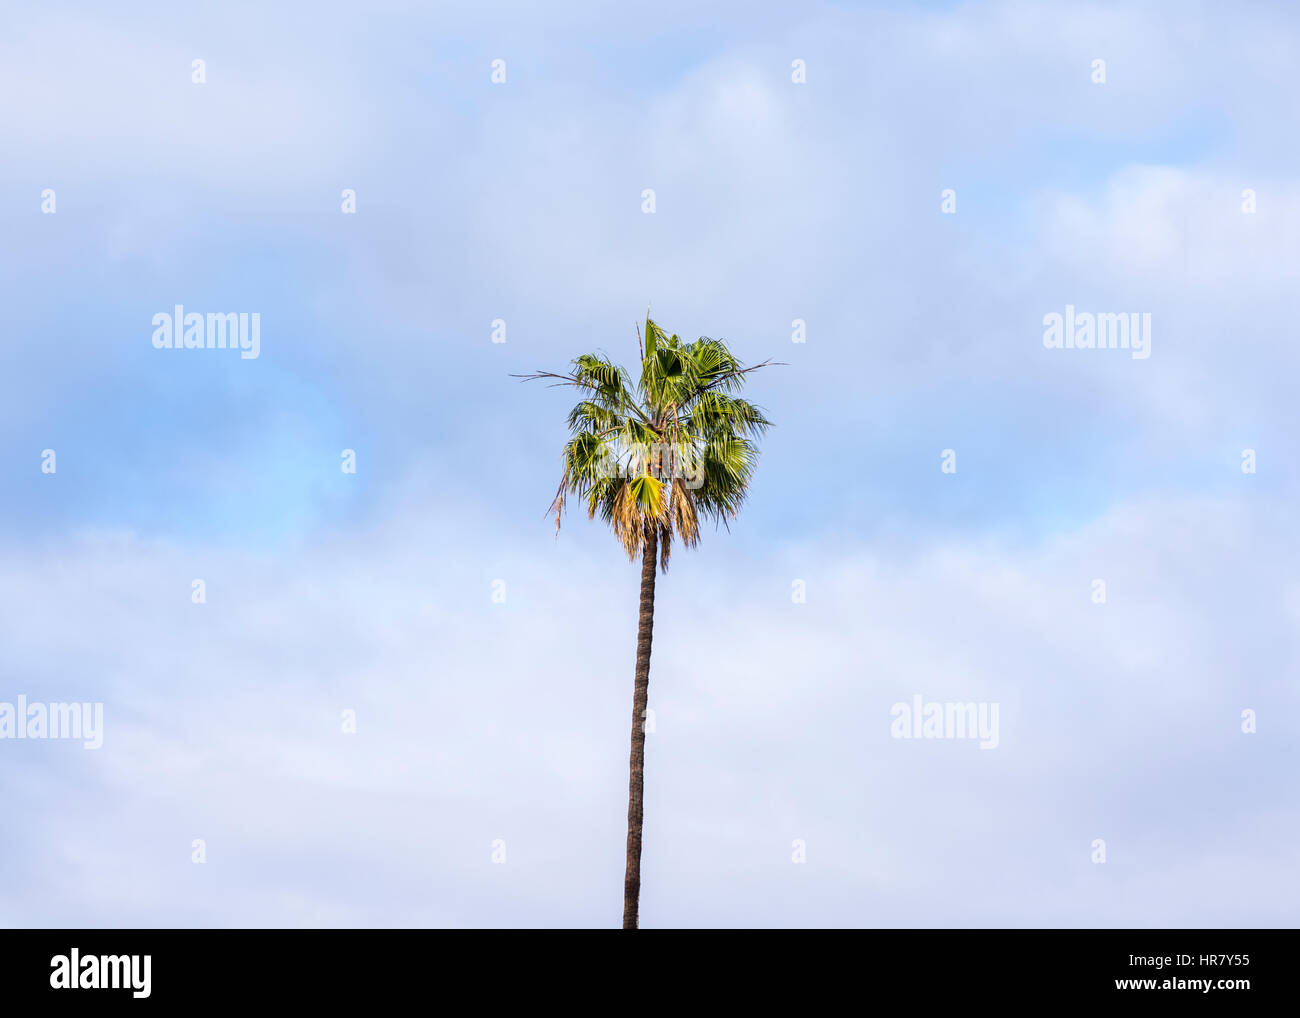 Palm trees against a cloudy sky. California, USA. Stock Photo